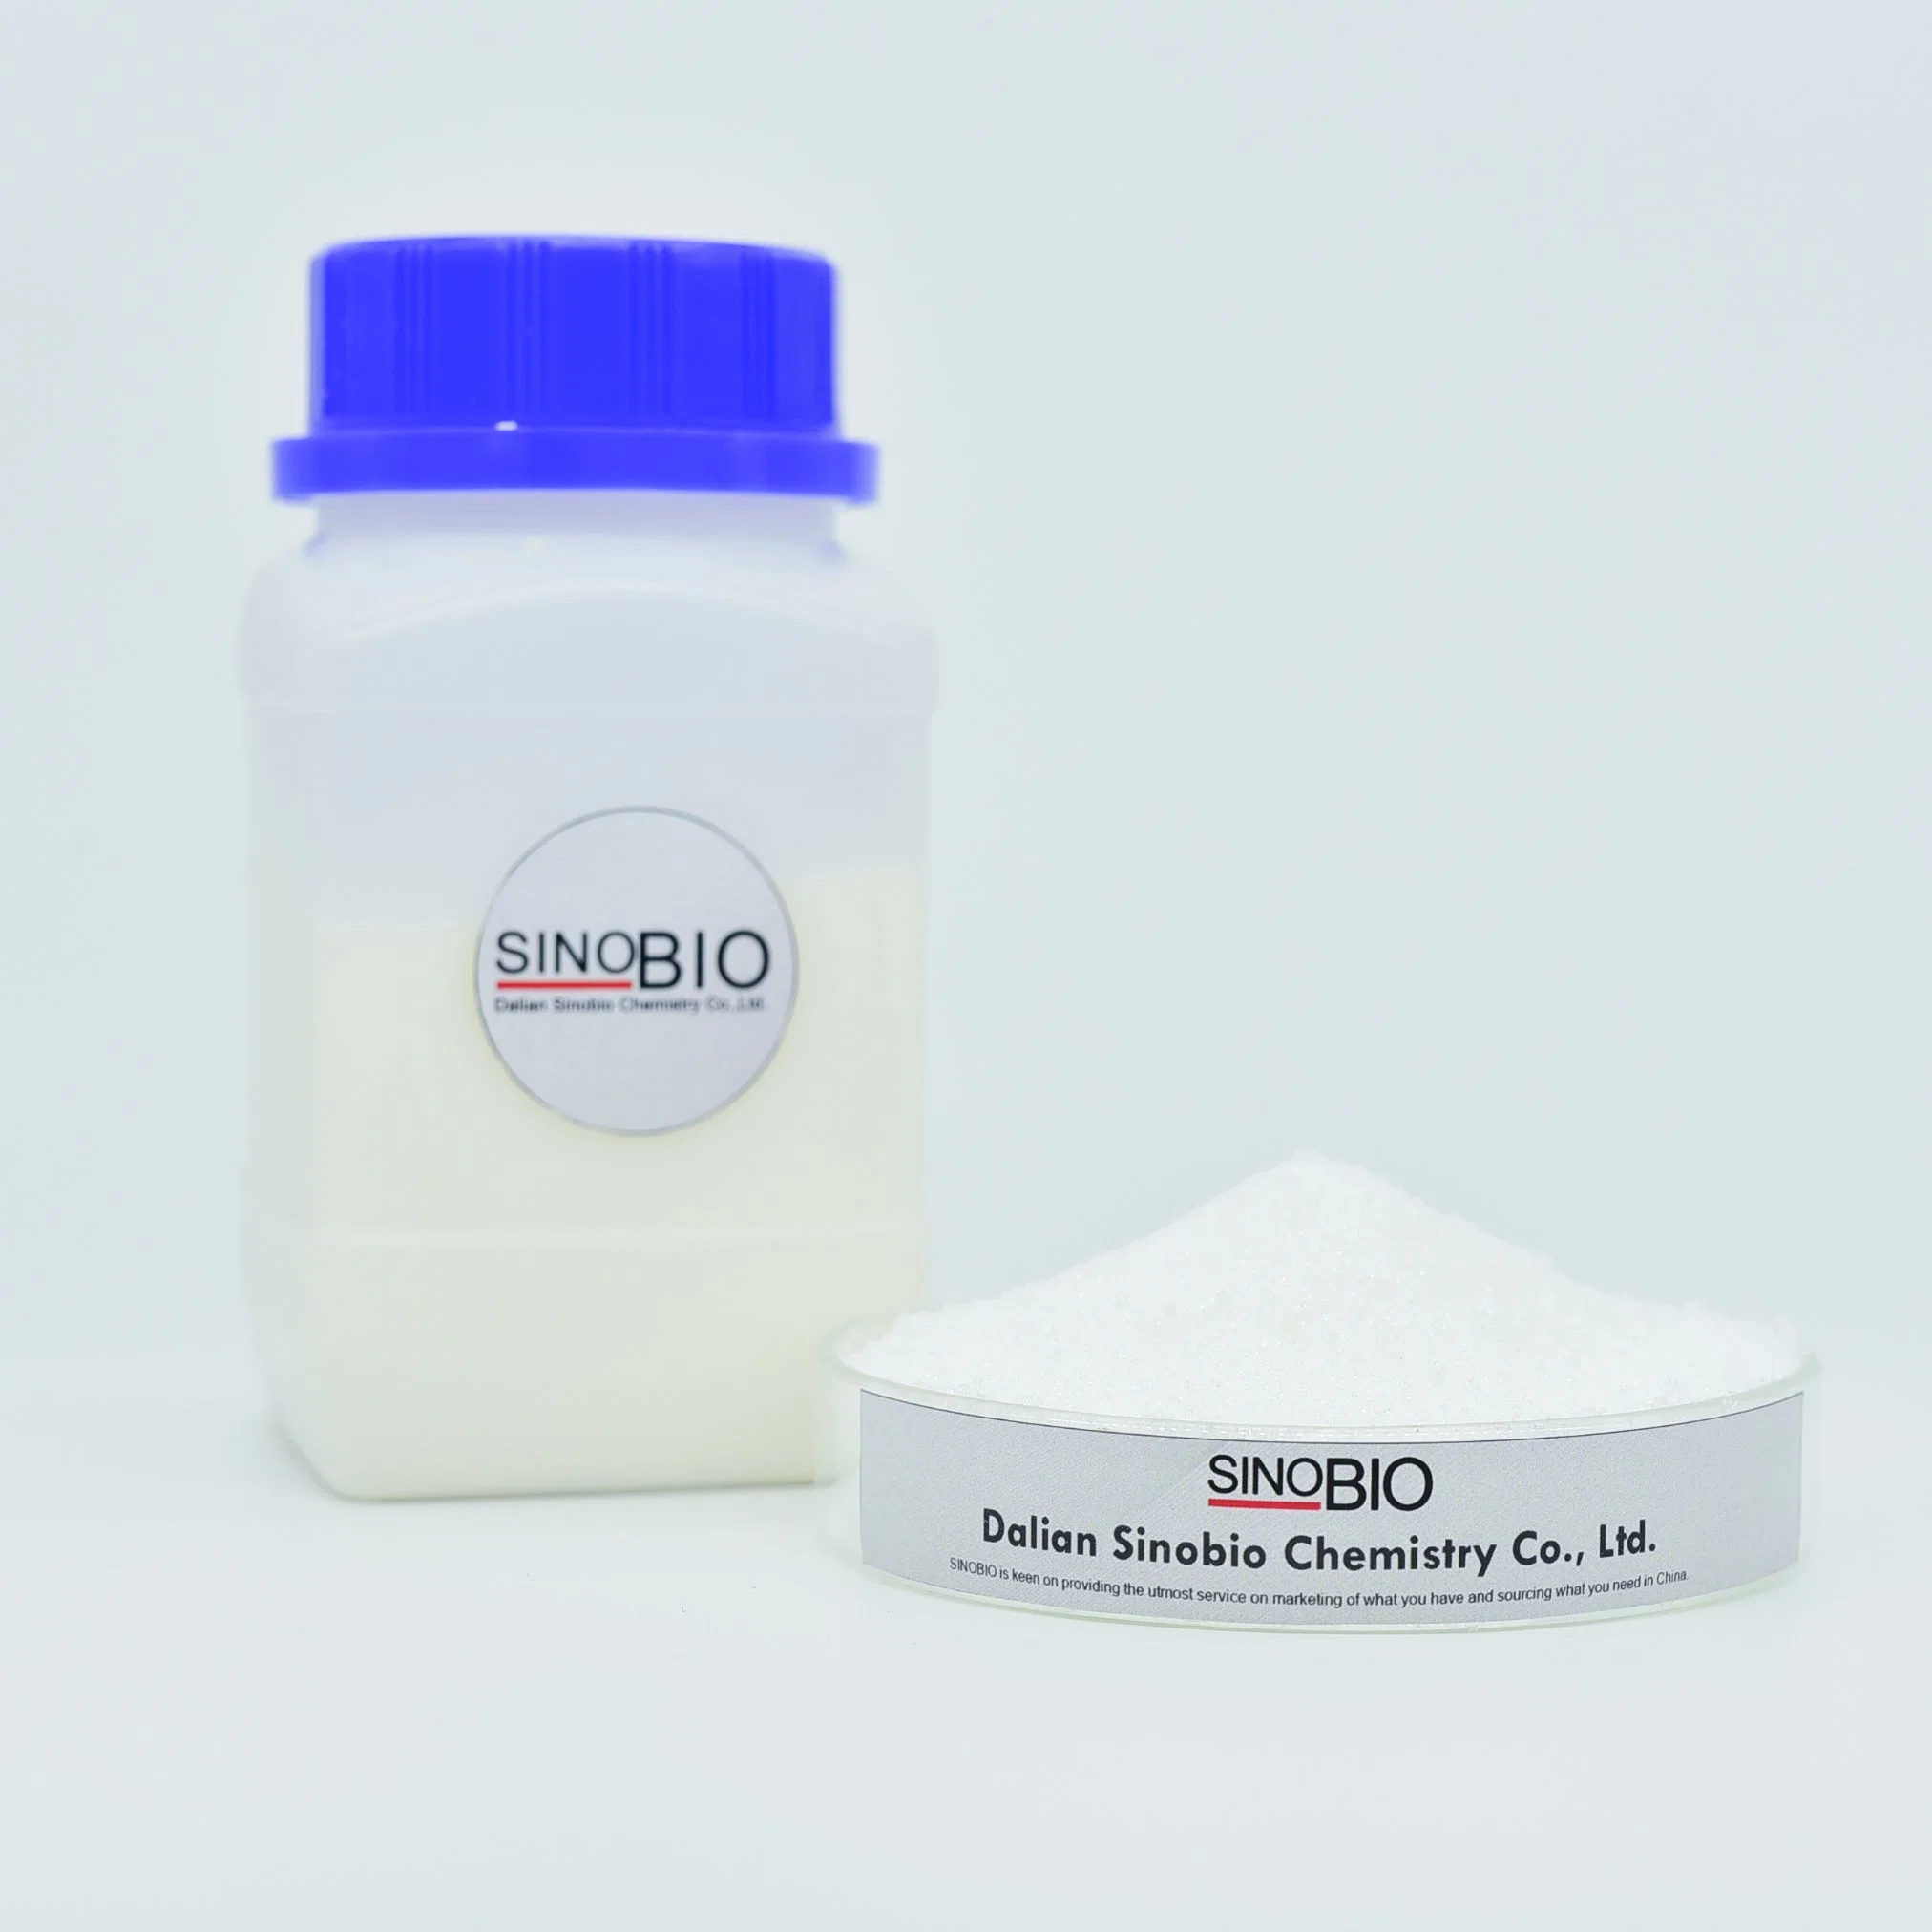 Sinobio Hot Selling Organic Intermediate Powder Fironil 120068-37-3